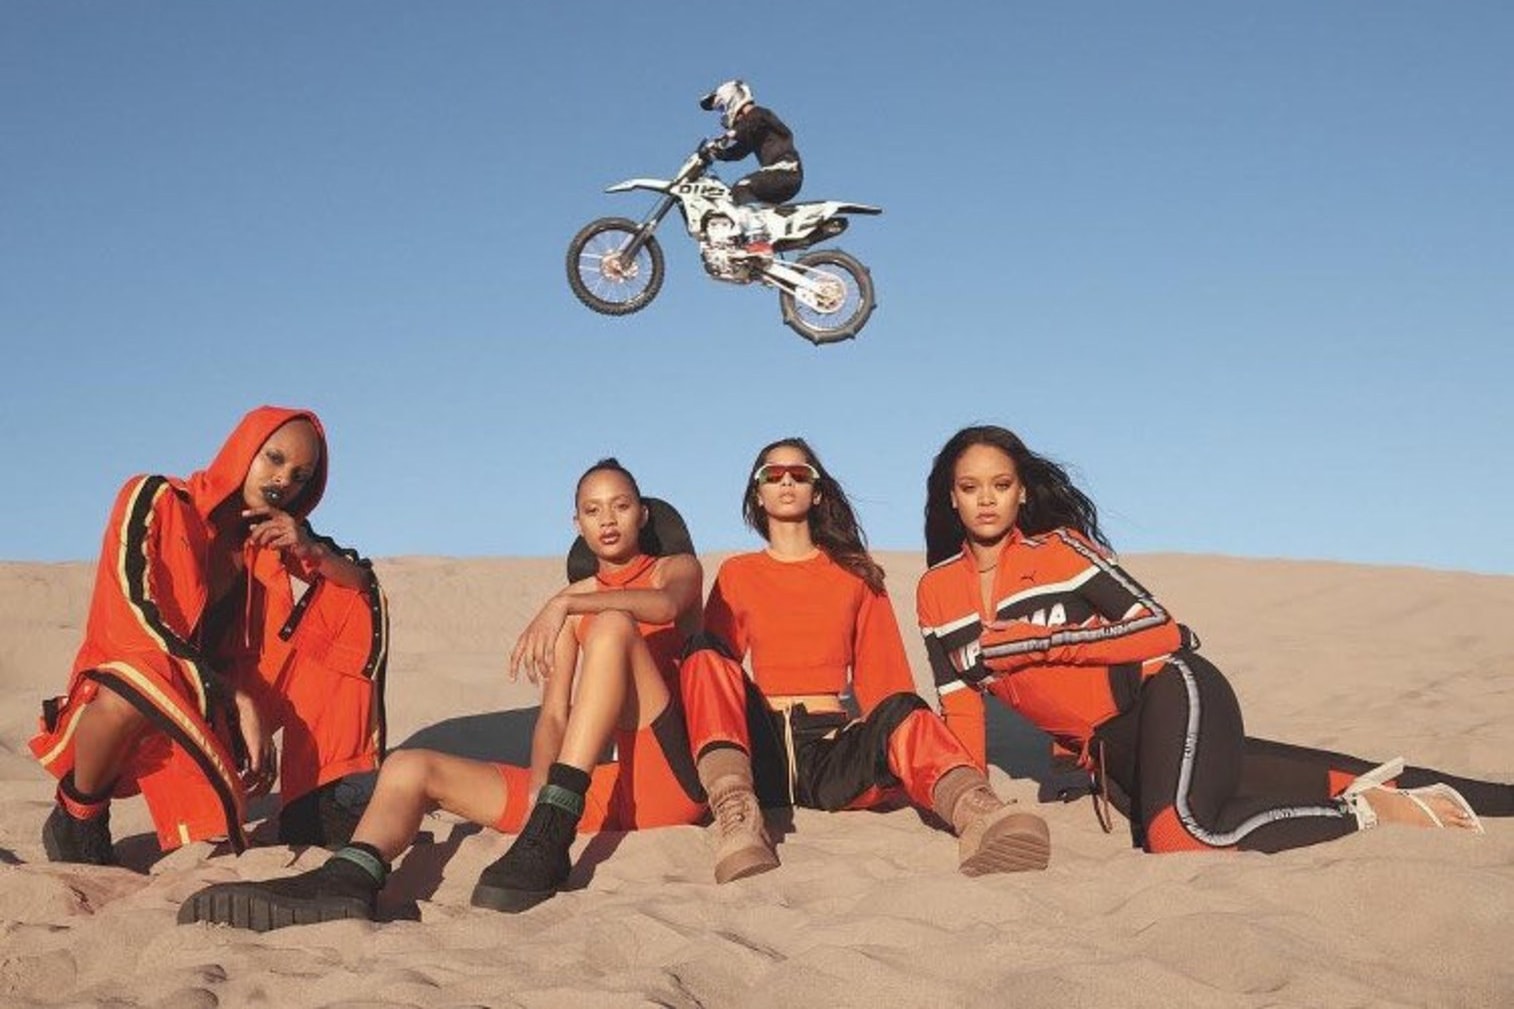 Rihanna Fenty PUMA Spring 2018 Campaign collection motocross release date info drop dirt bike biking imagery